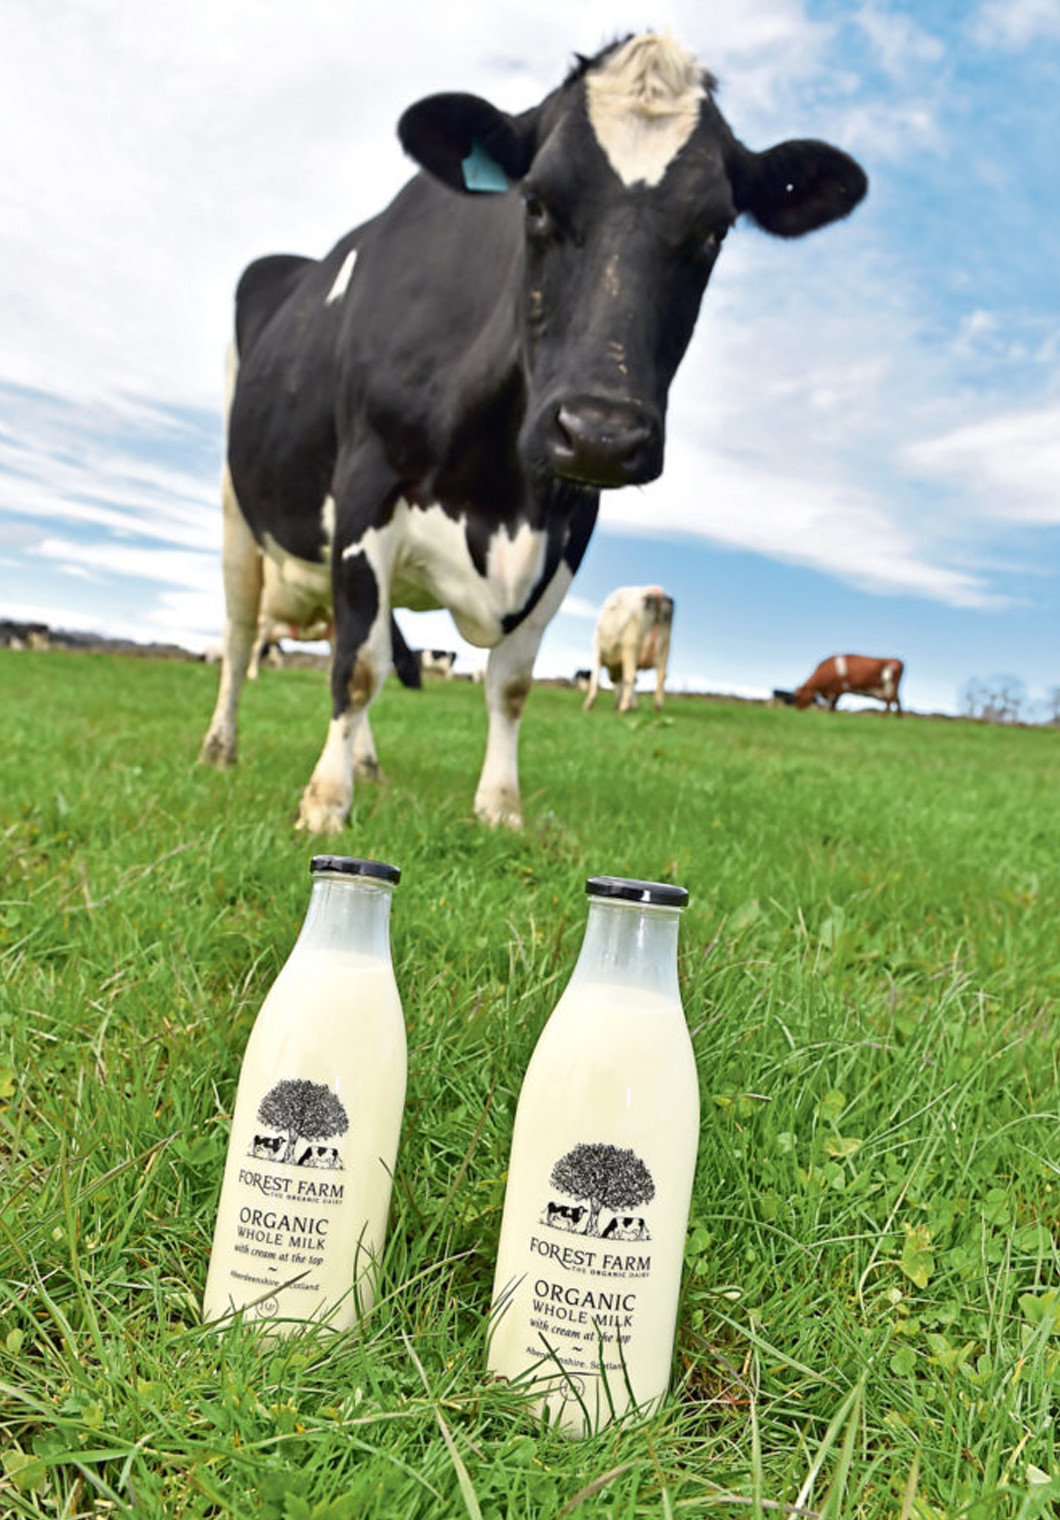 The Organic Dairy